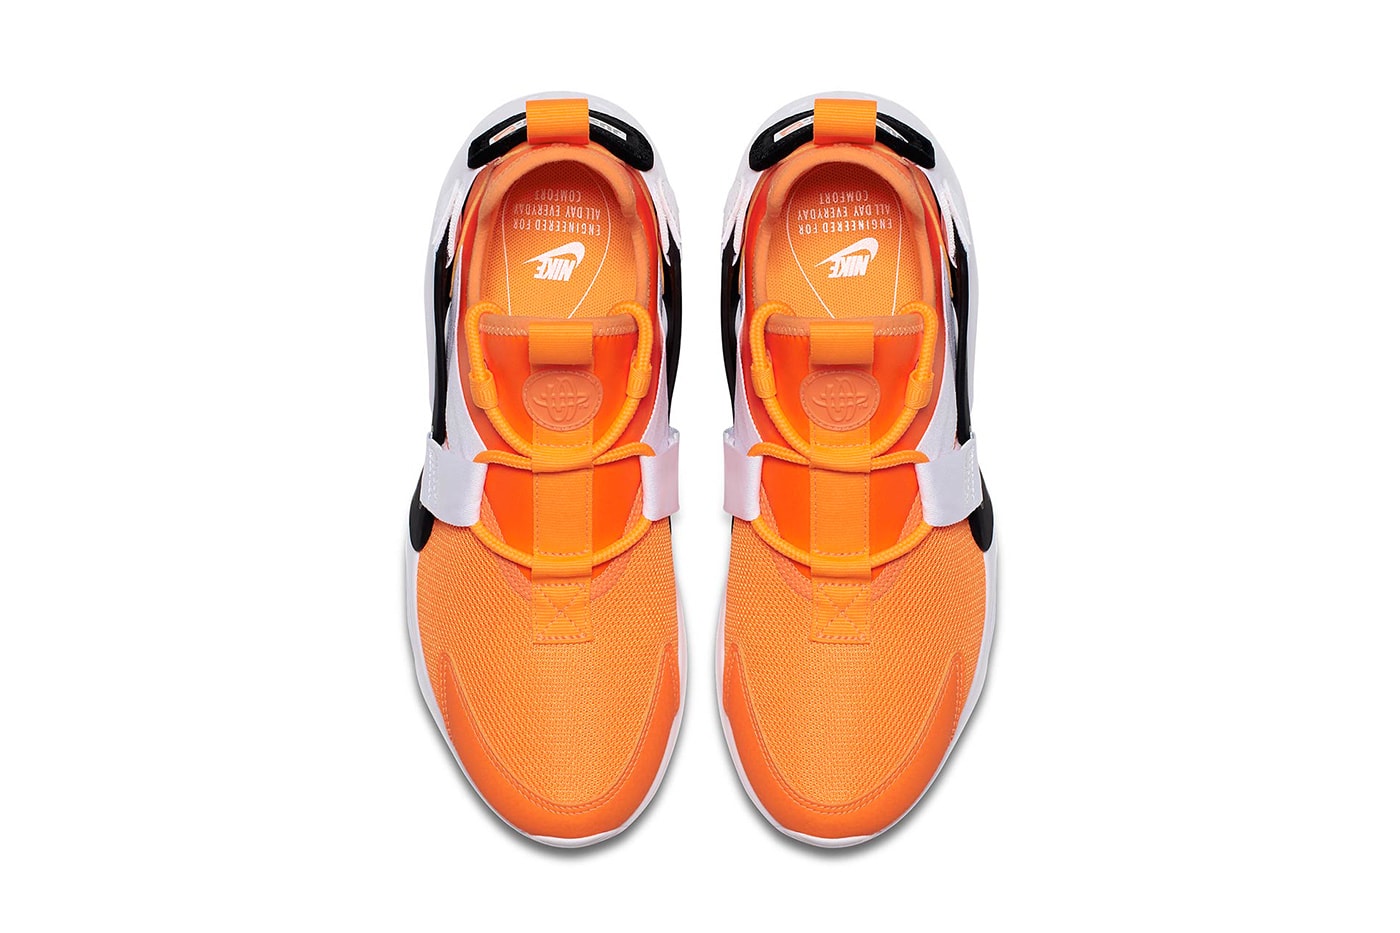 Nike Huarache City low just do it collection orange white black nike sportswear 2018 august footwear